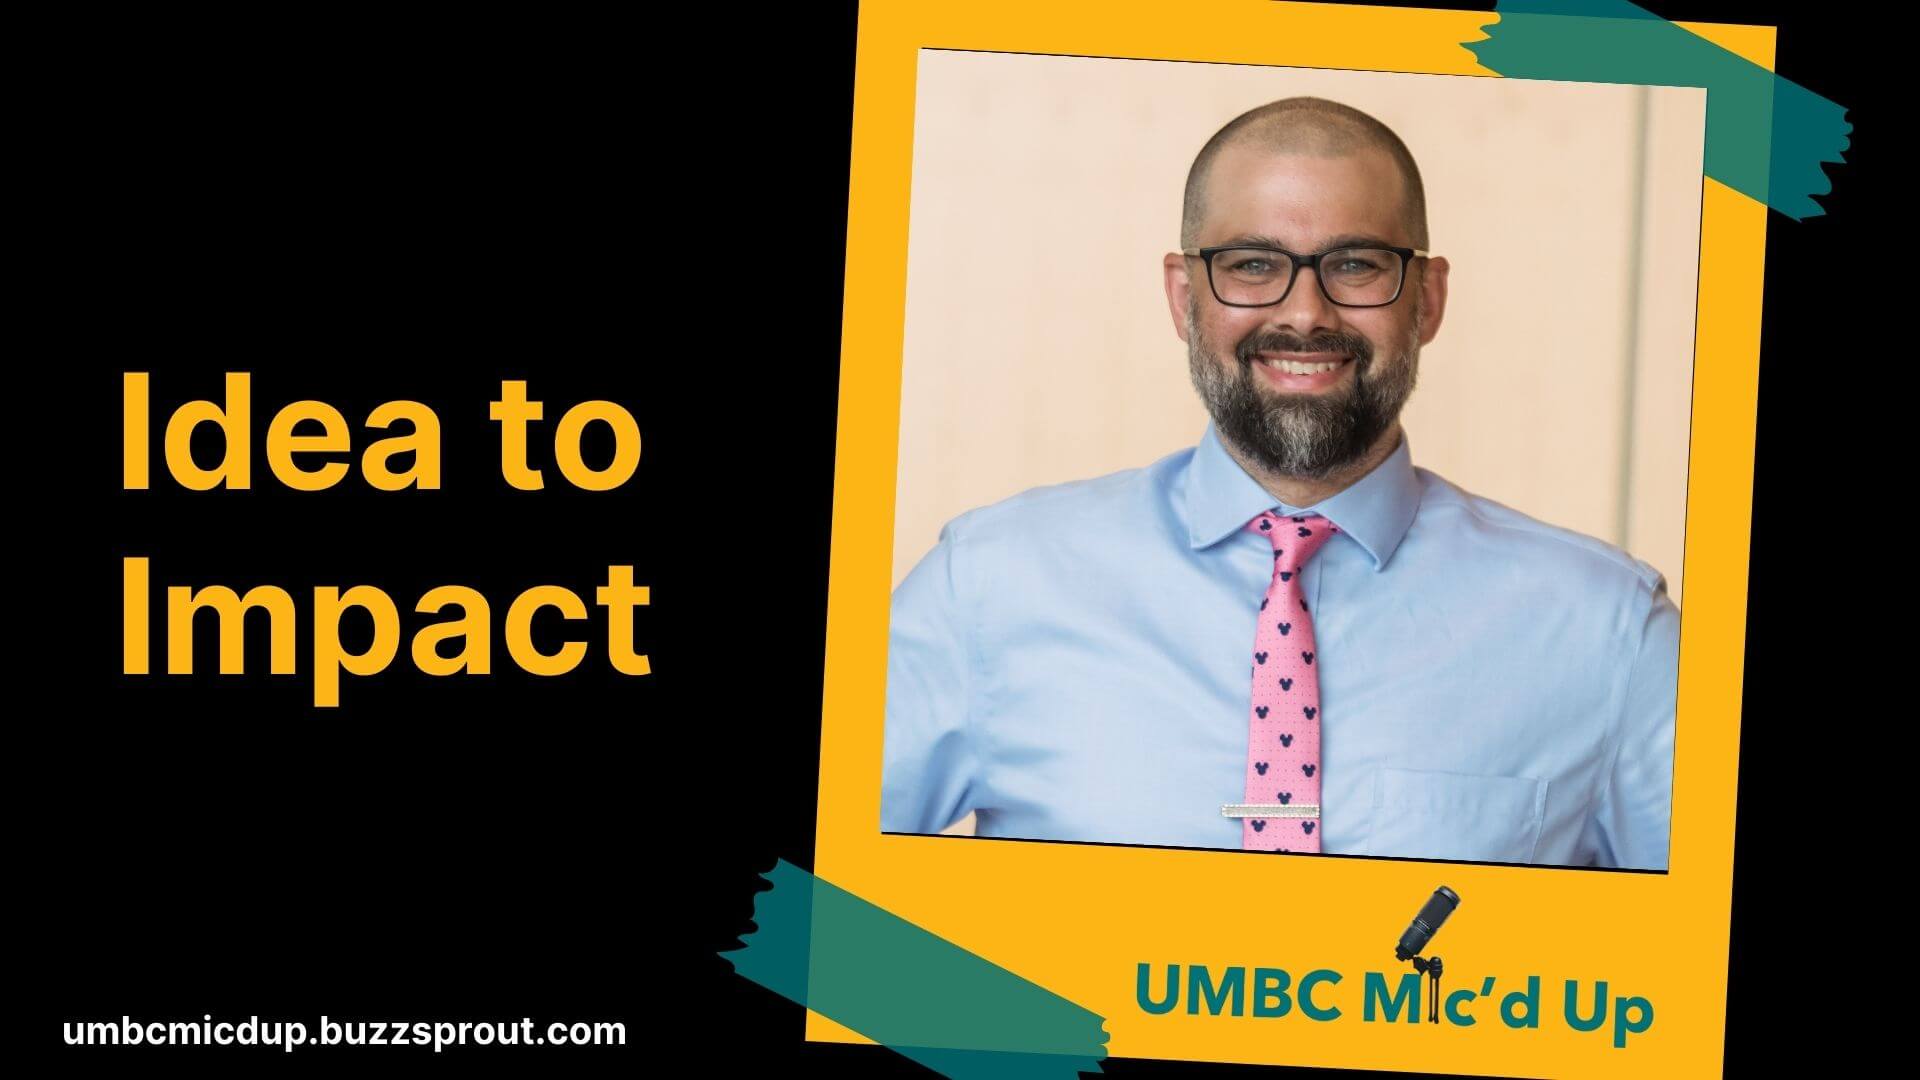 UMBC Mic'd Up Podcast features a recent graduate of EIL.